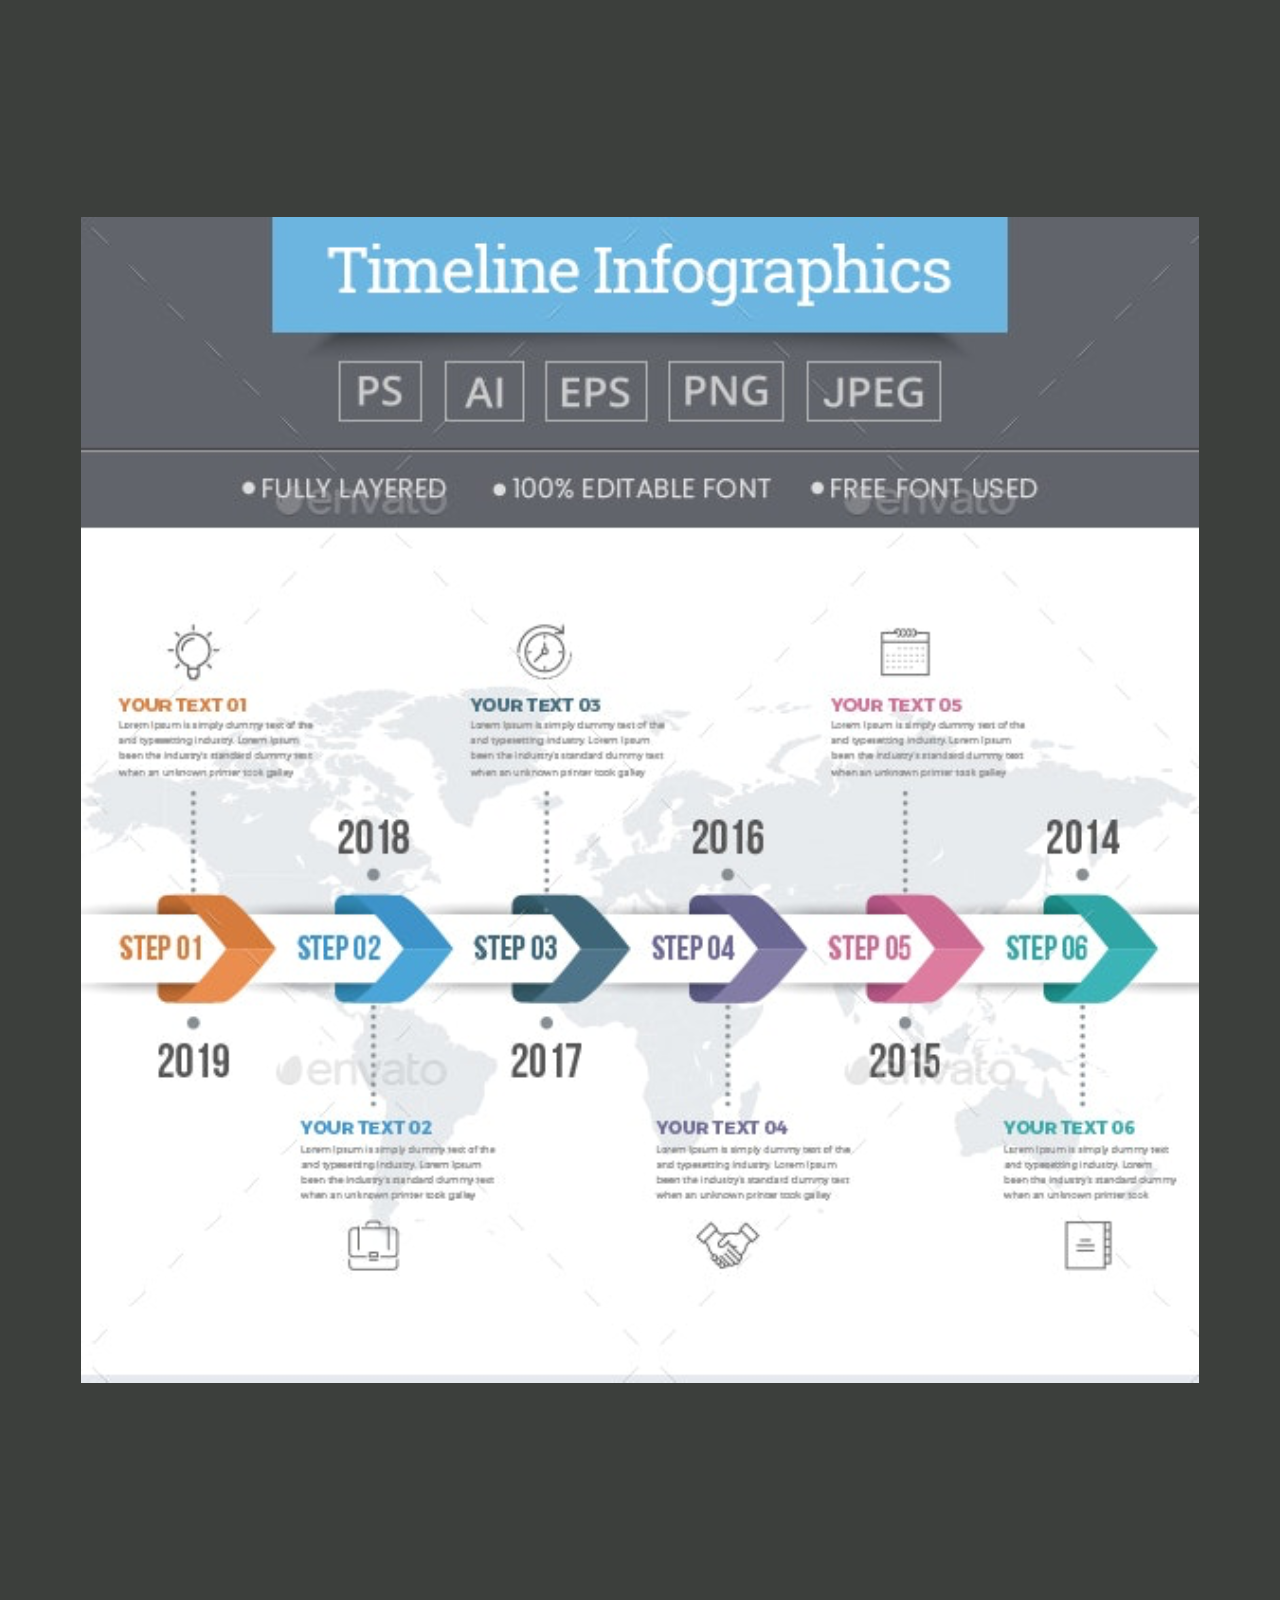 Timeline infographics pinterest image.